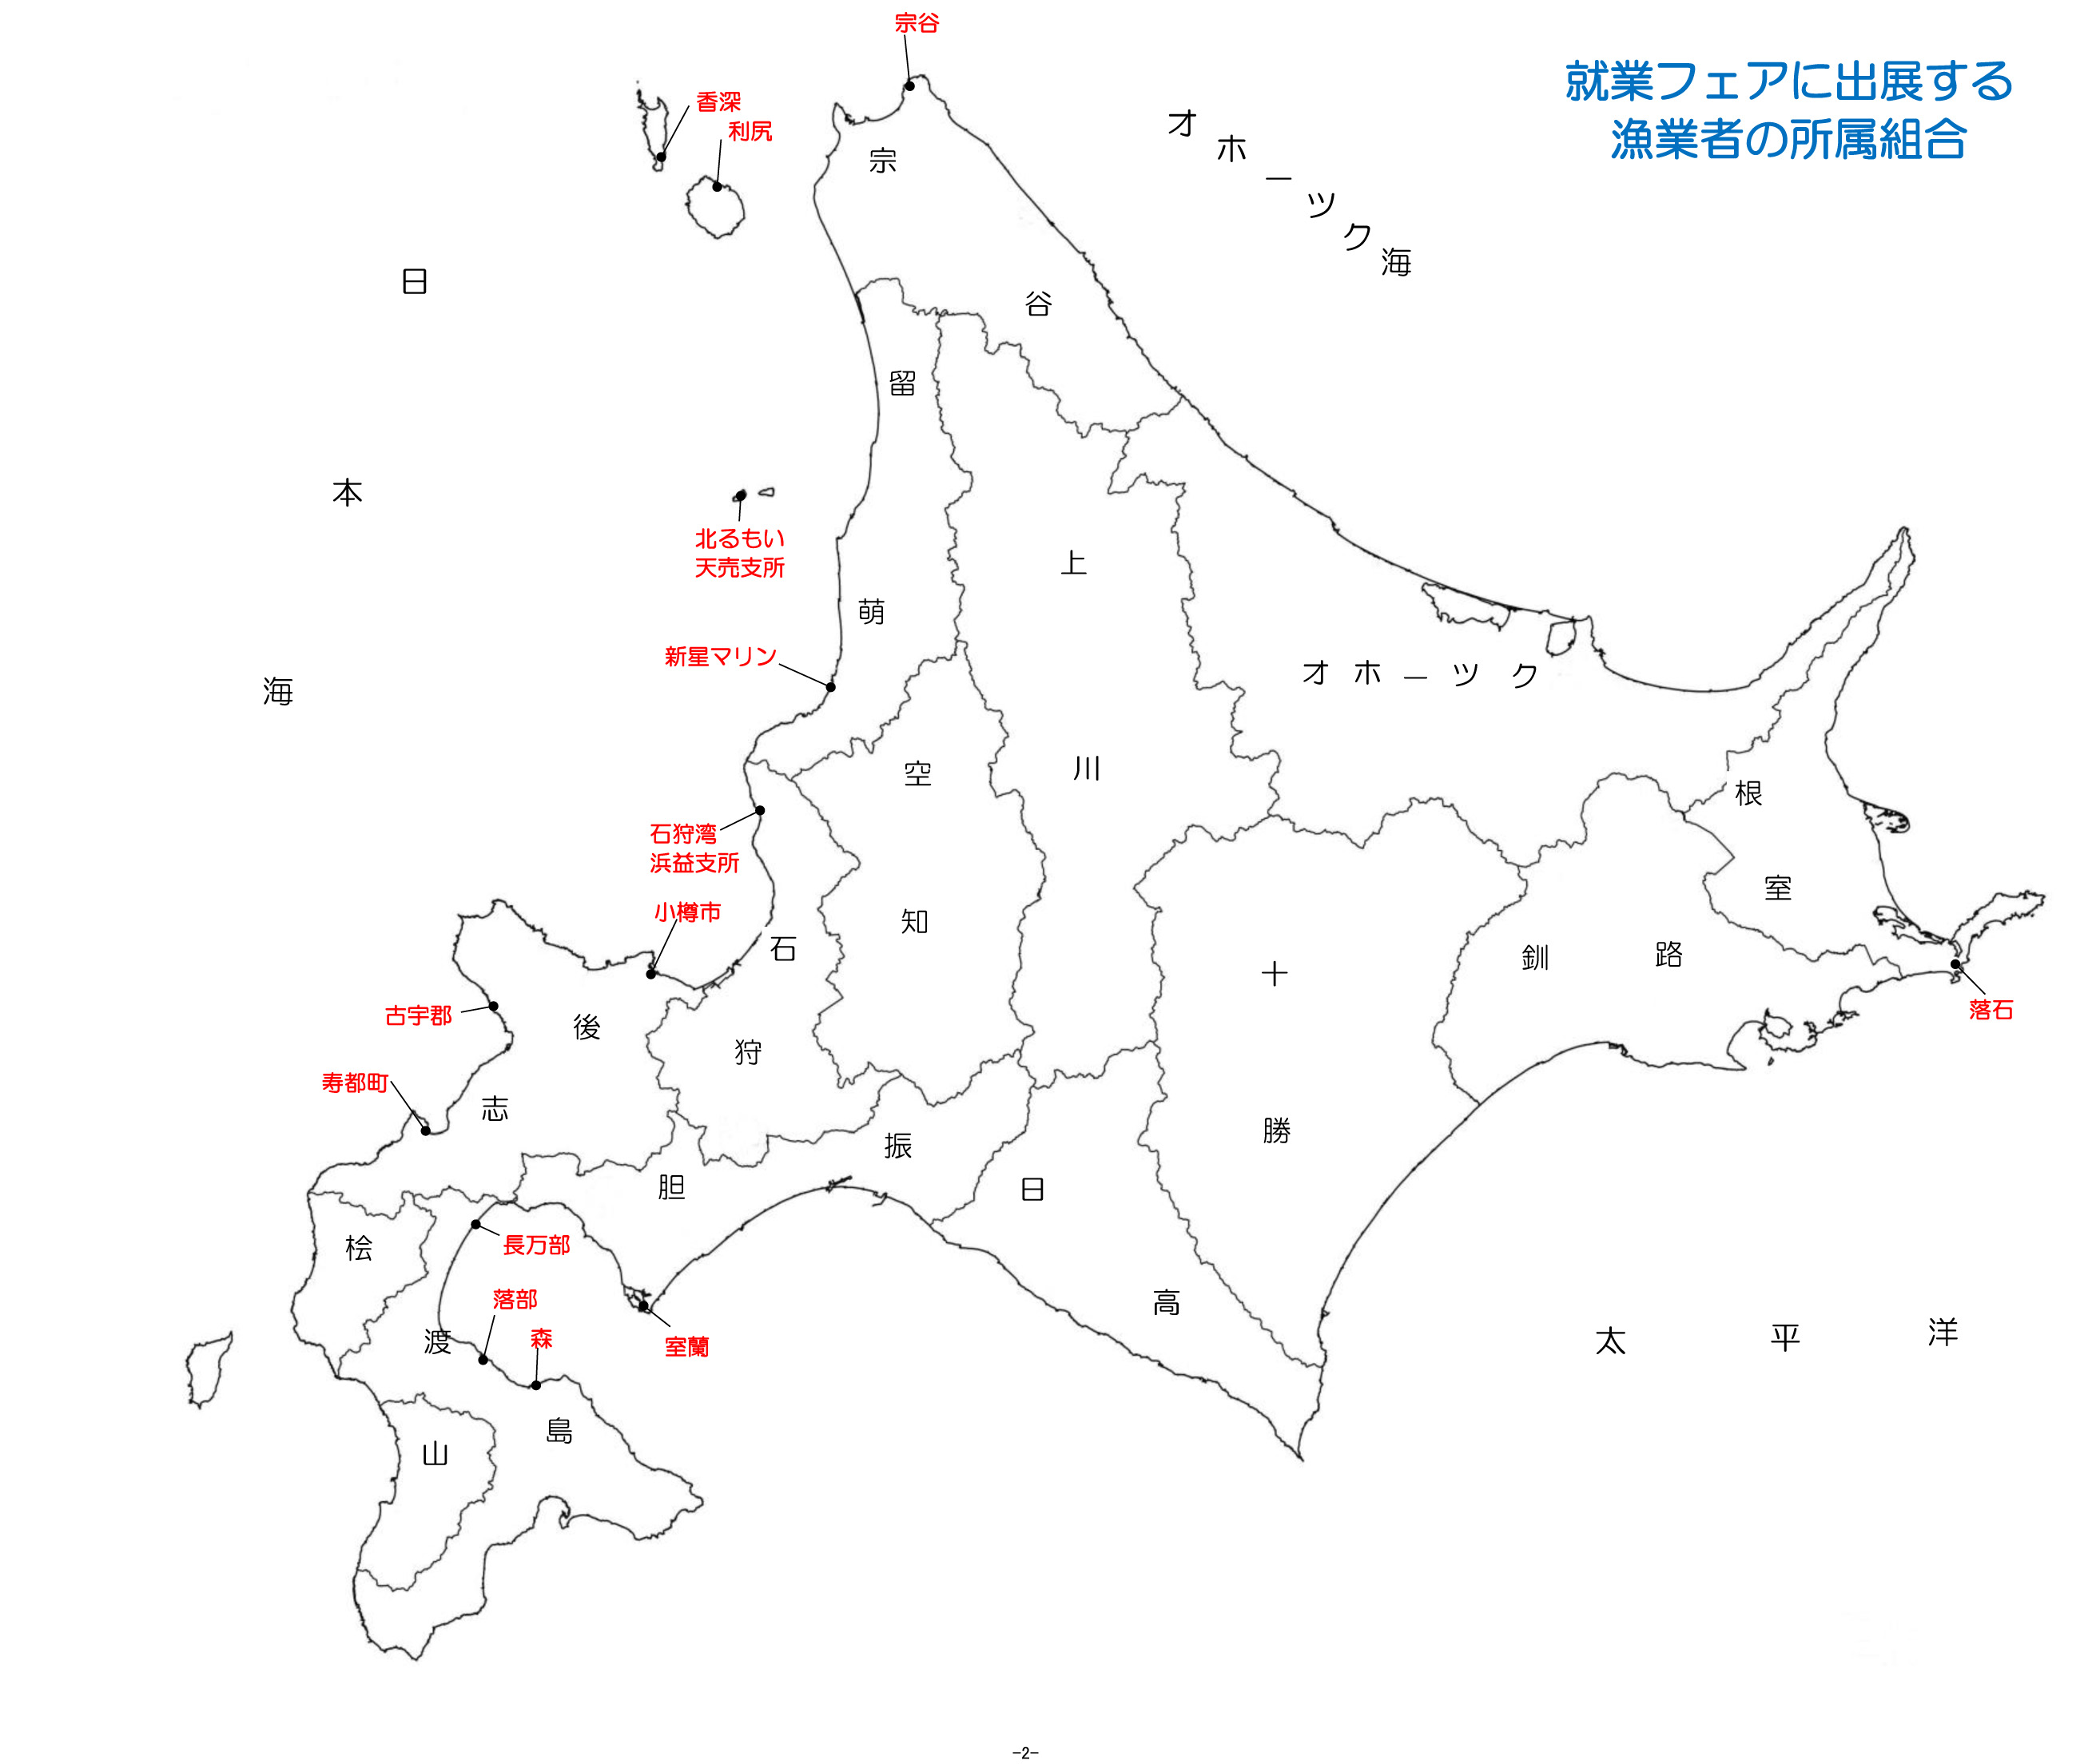 2016札幌フェア2出展団体分布図